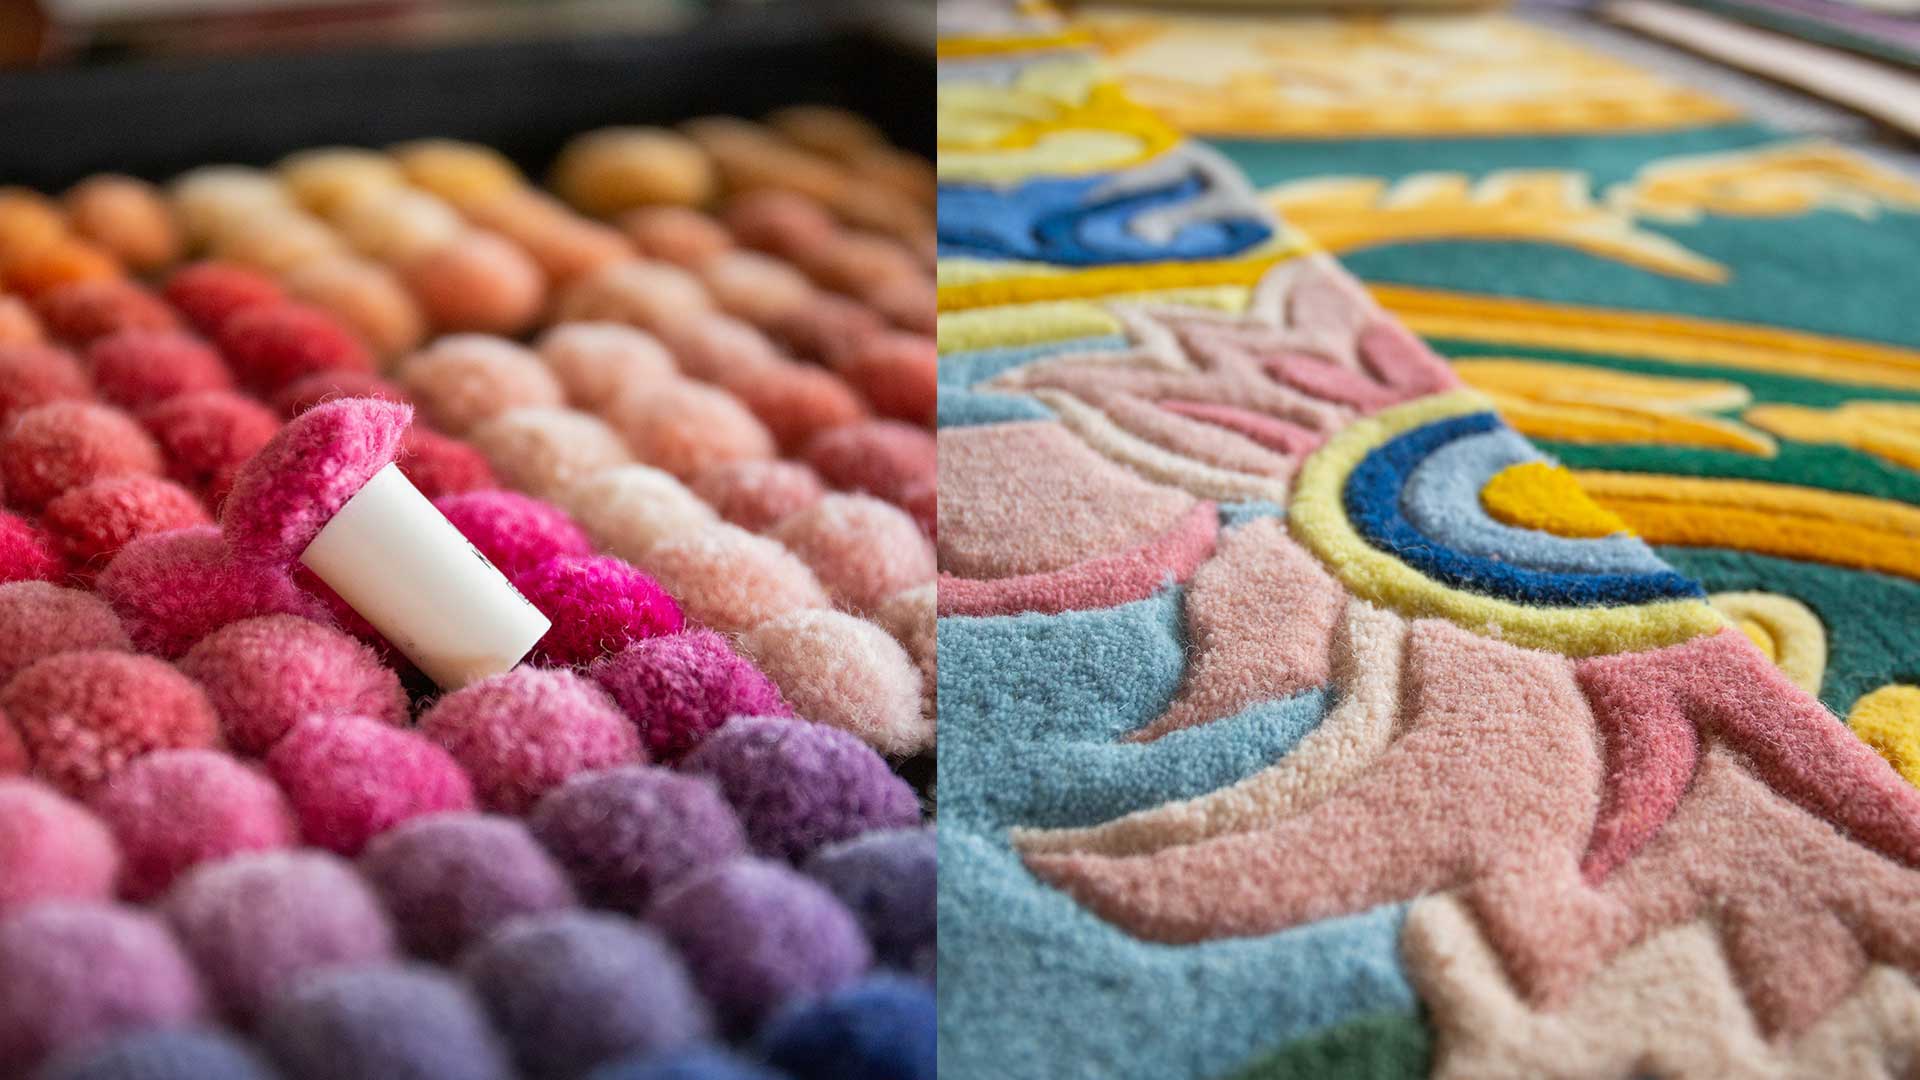 Colorful Carpet